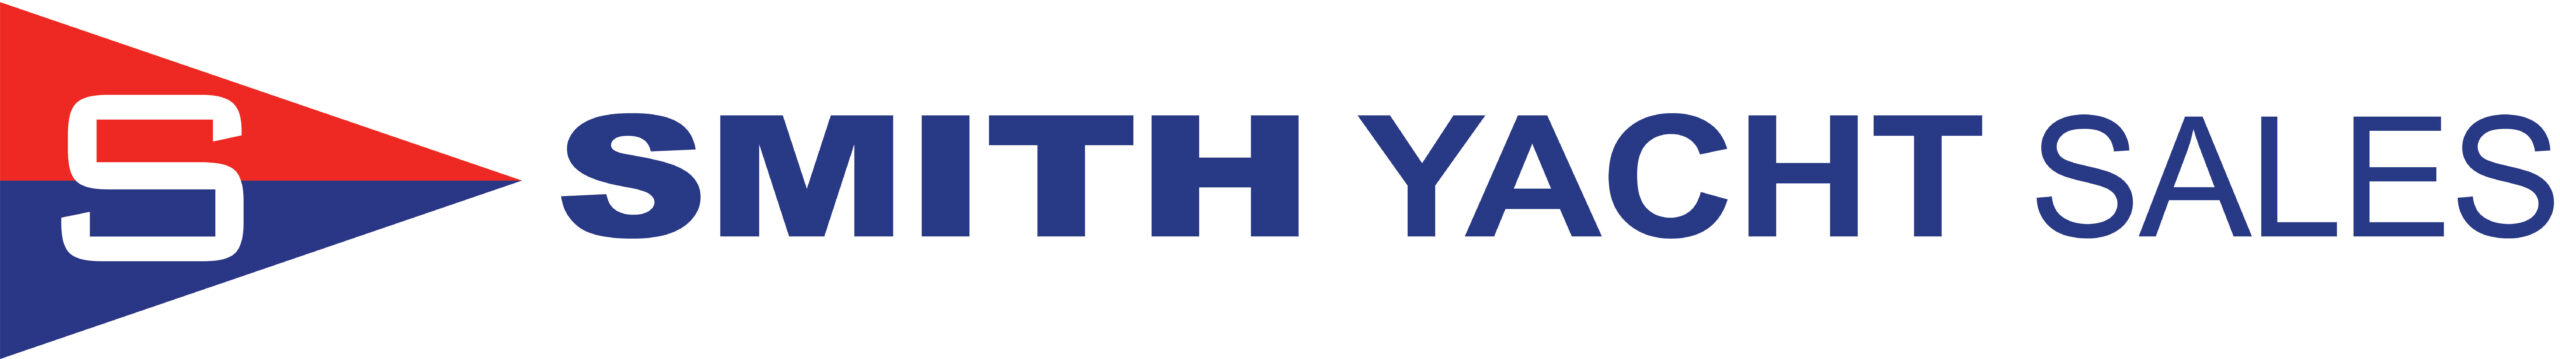 Smith Yacht Sales